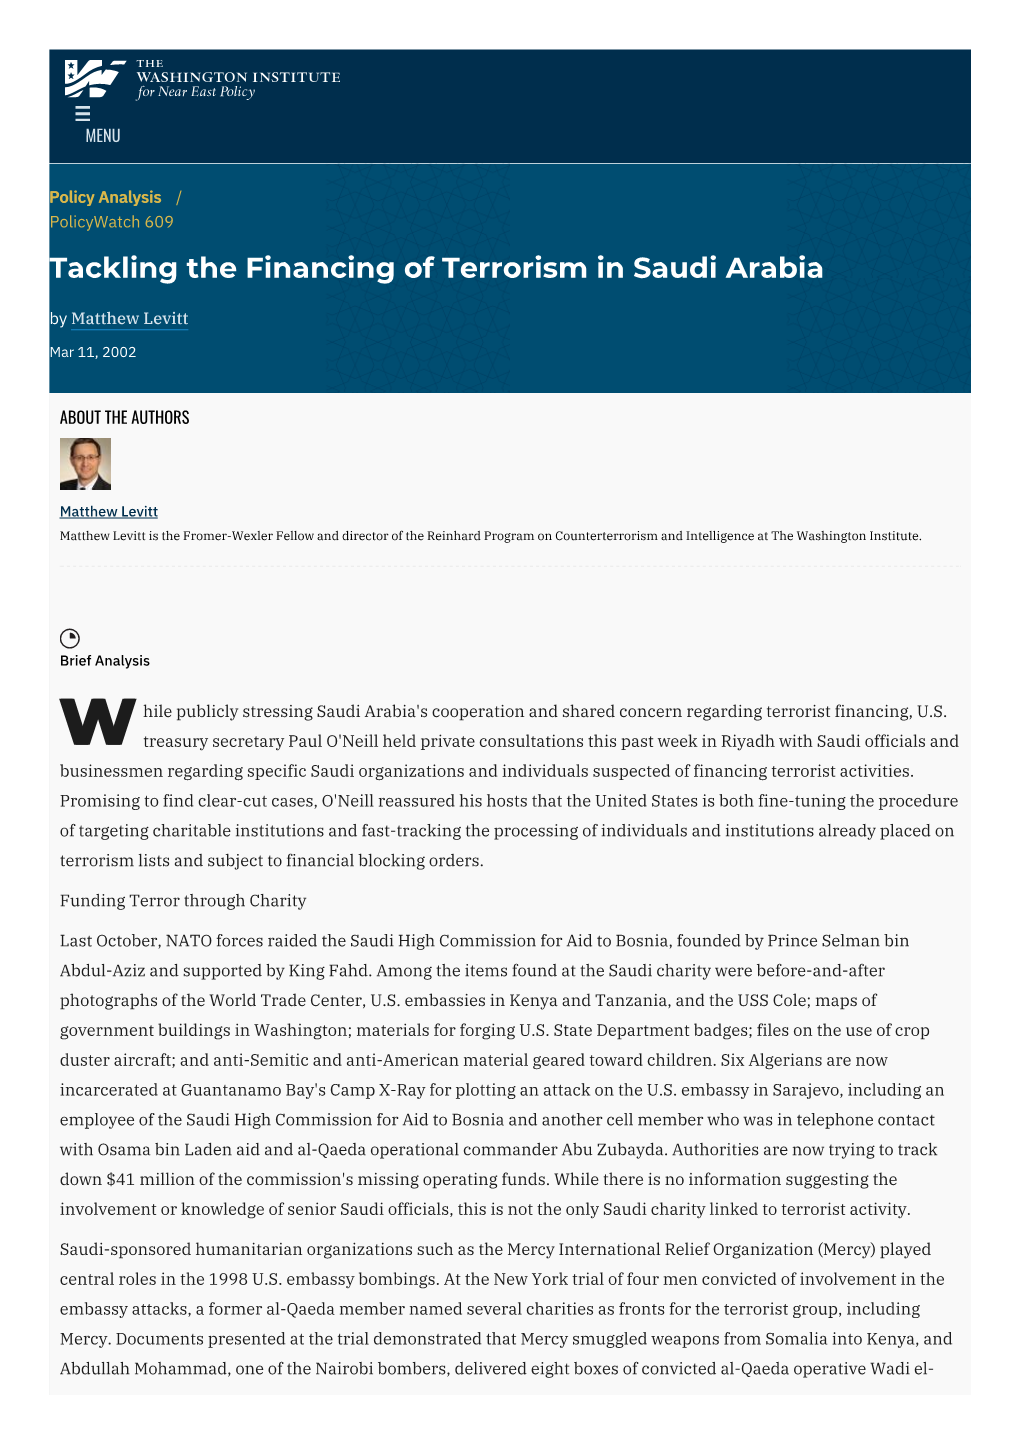 Tackling the Financing of Terrorism in Saudi Arabia by Matthew Levitt